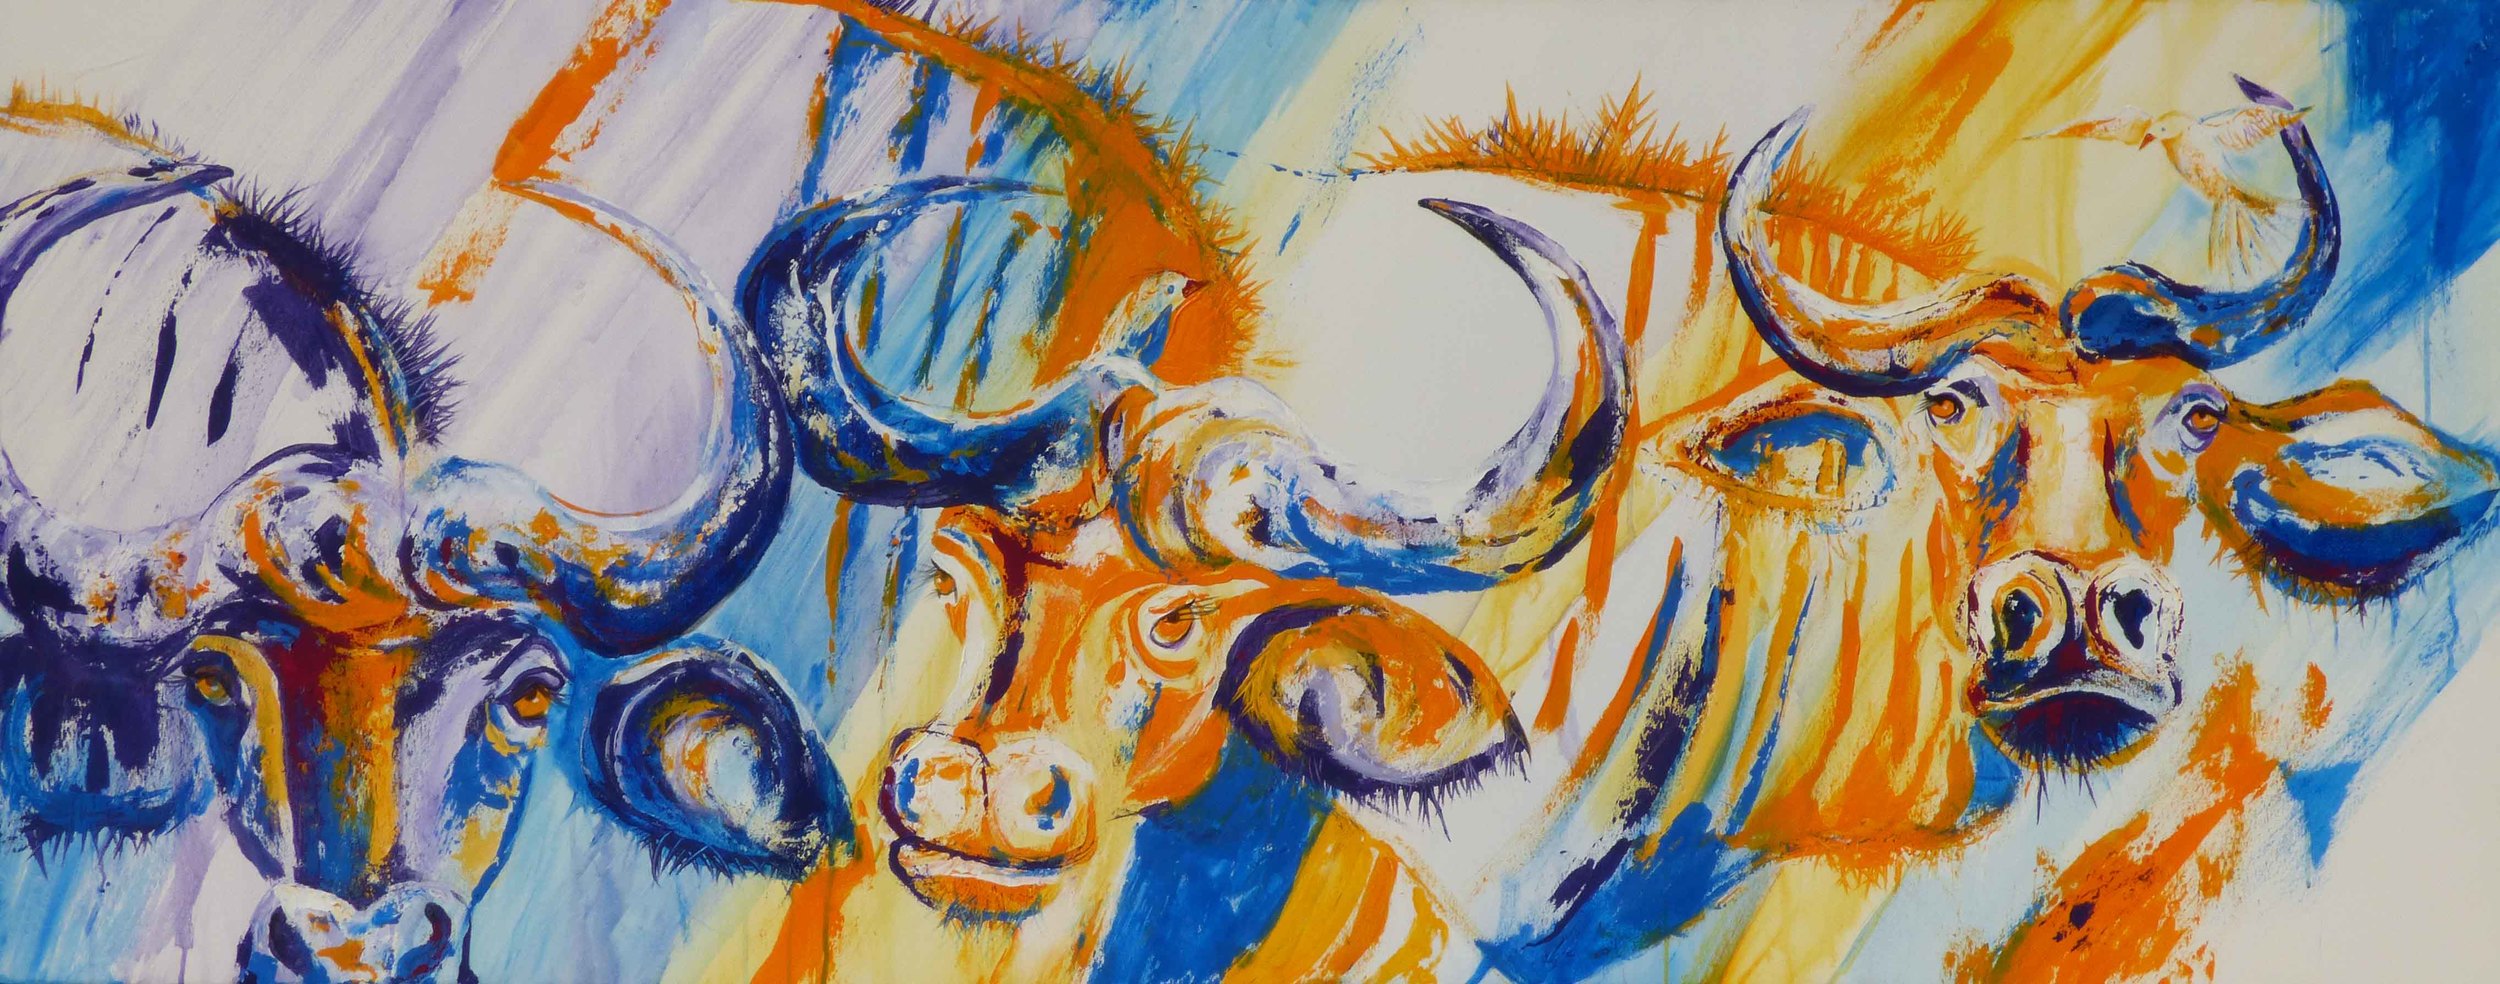 Three Buffalos 80 x 200 cm Acrylic on canvas 2015.jpg